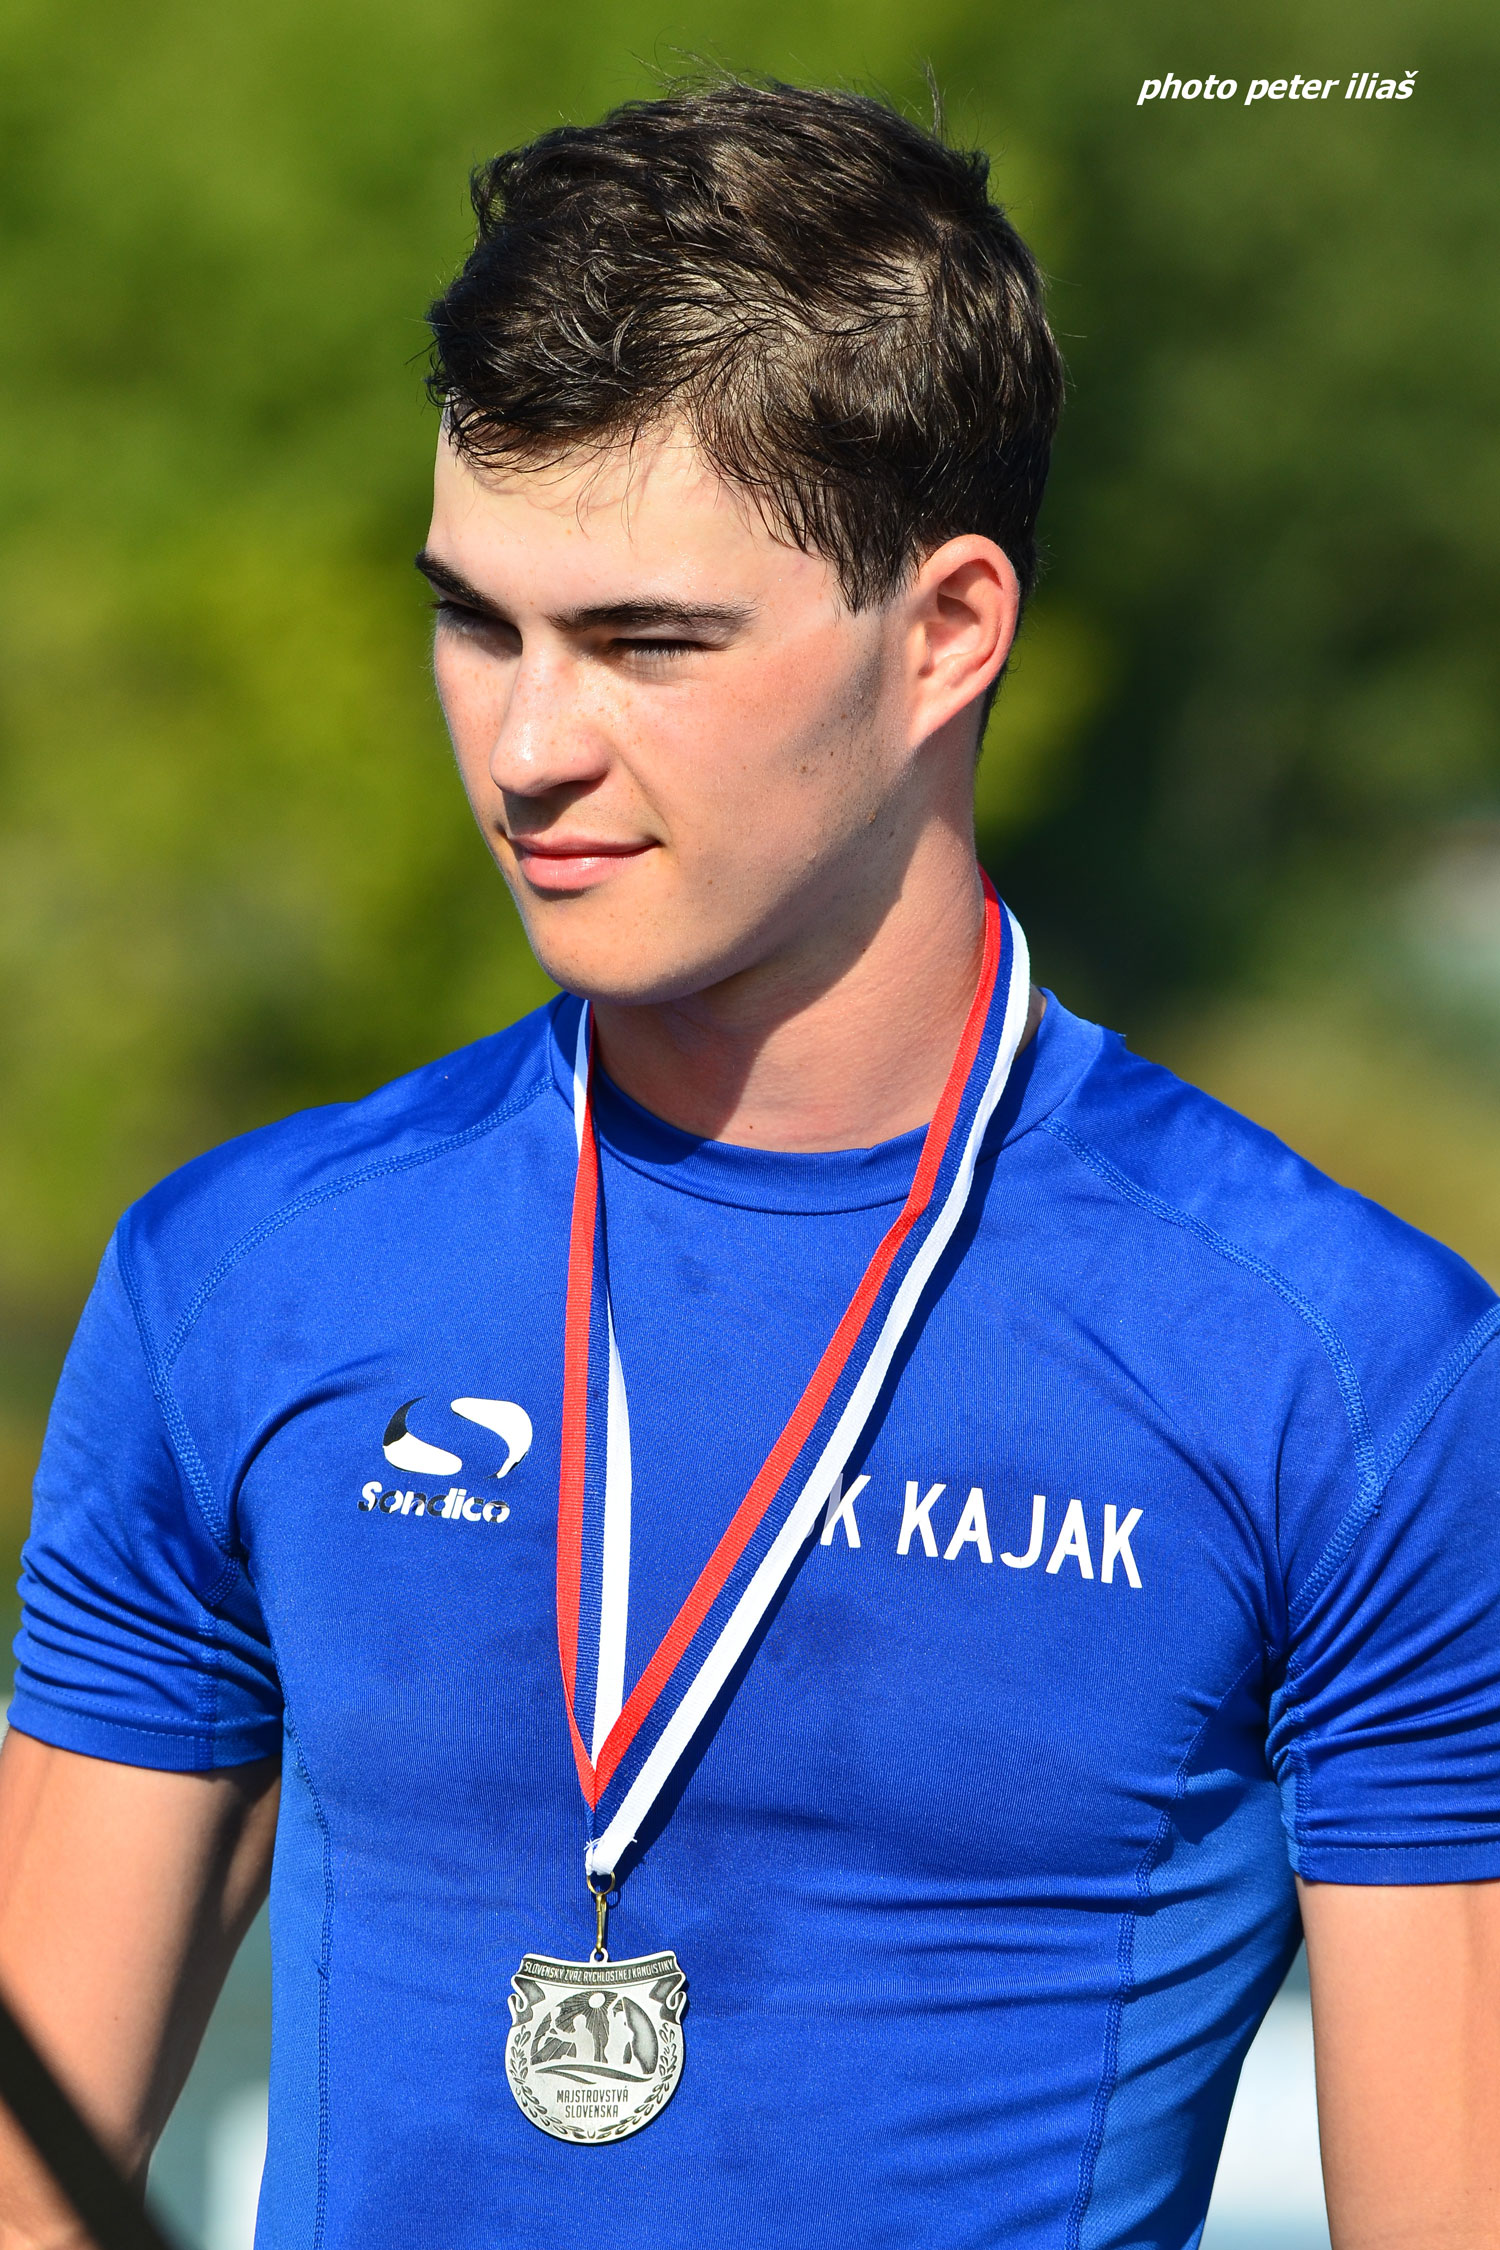 Majstrovstvá Slovenska - krátke trate  - fotka